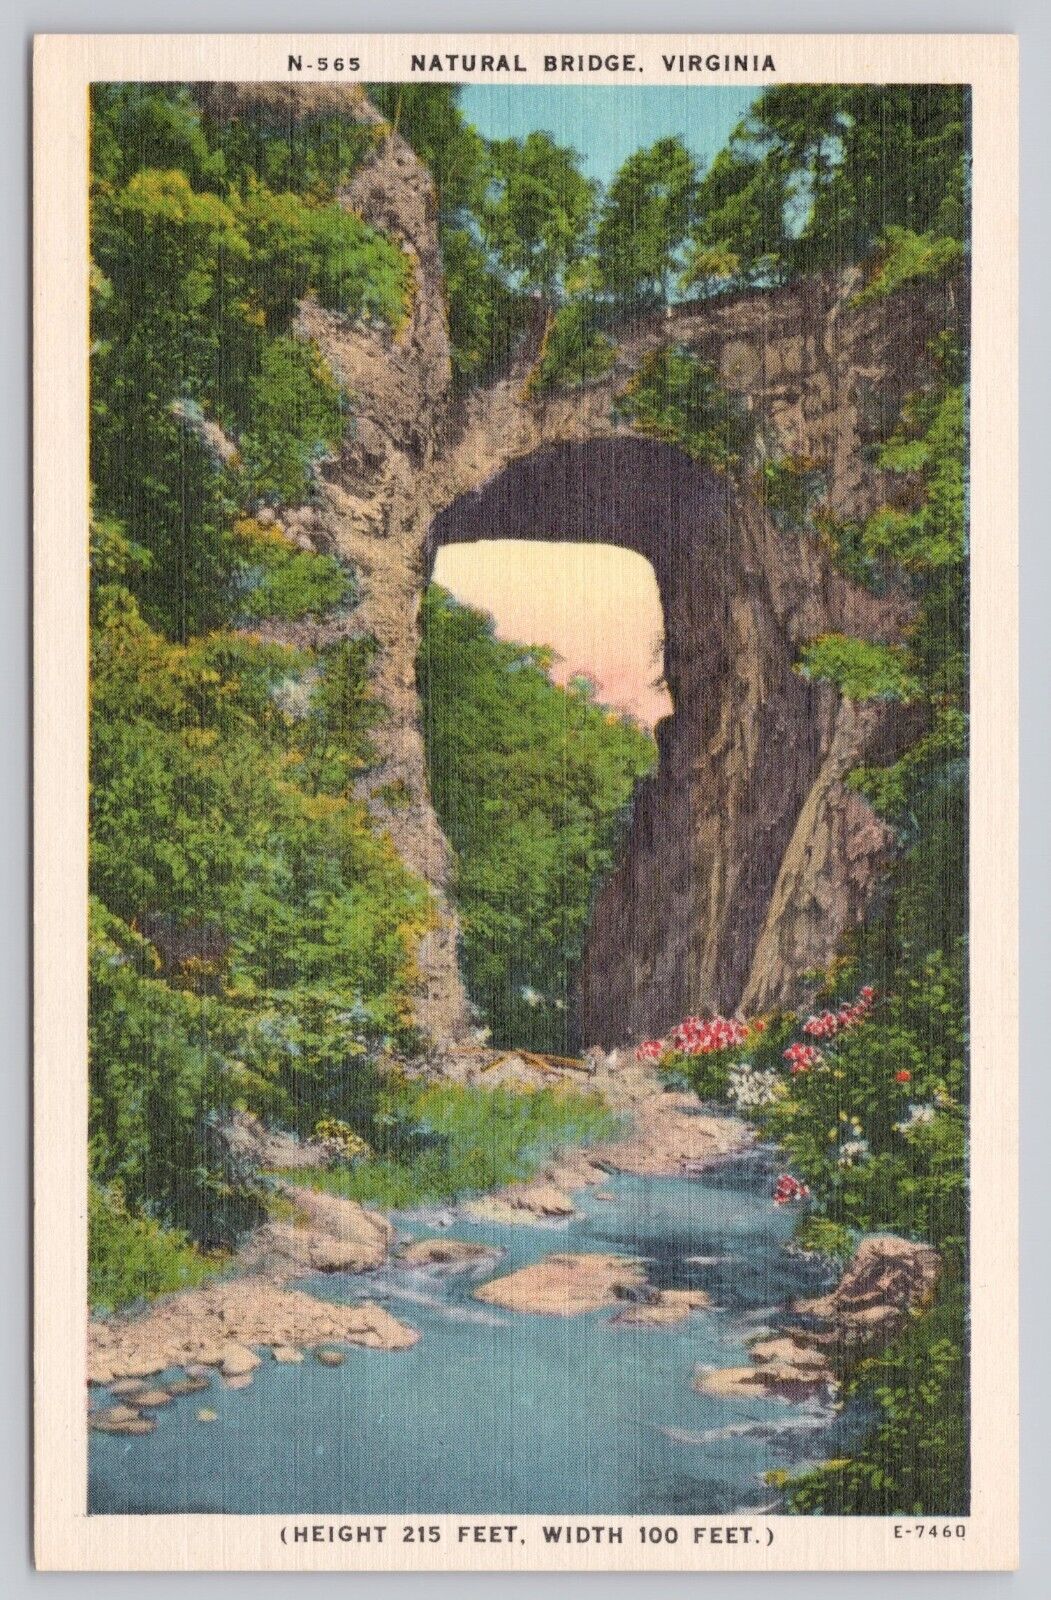 Natural Bridge Virginia, Natural Bridge Scenic View, Vintage Postcard